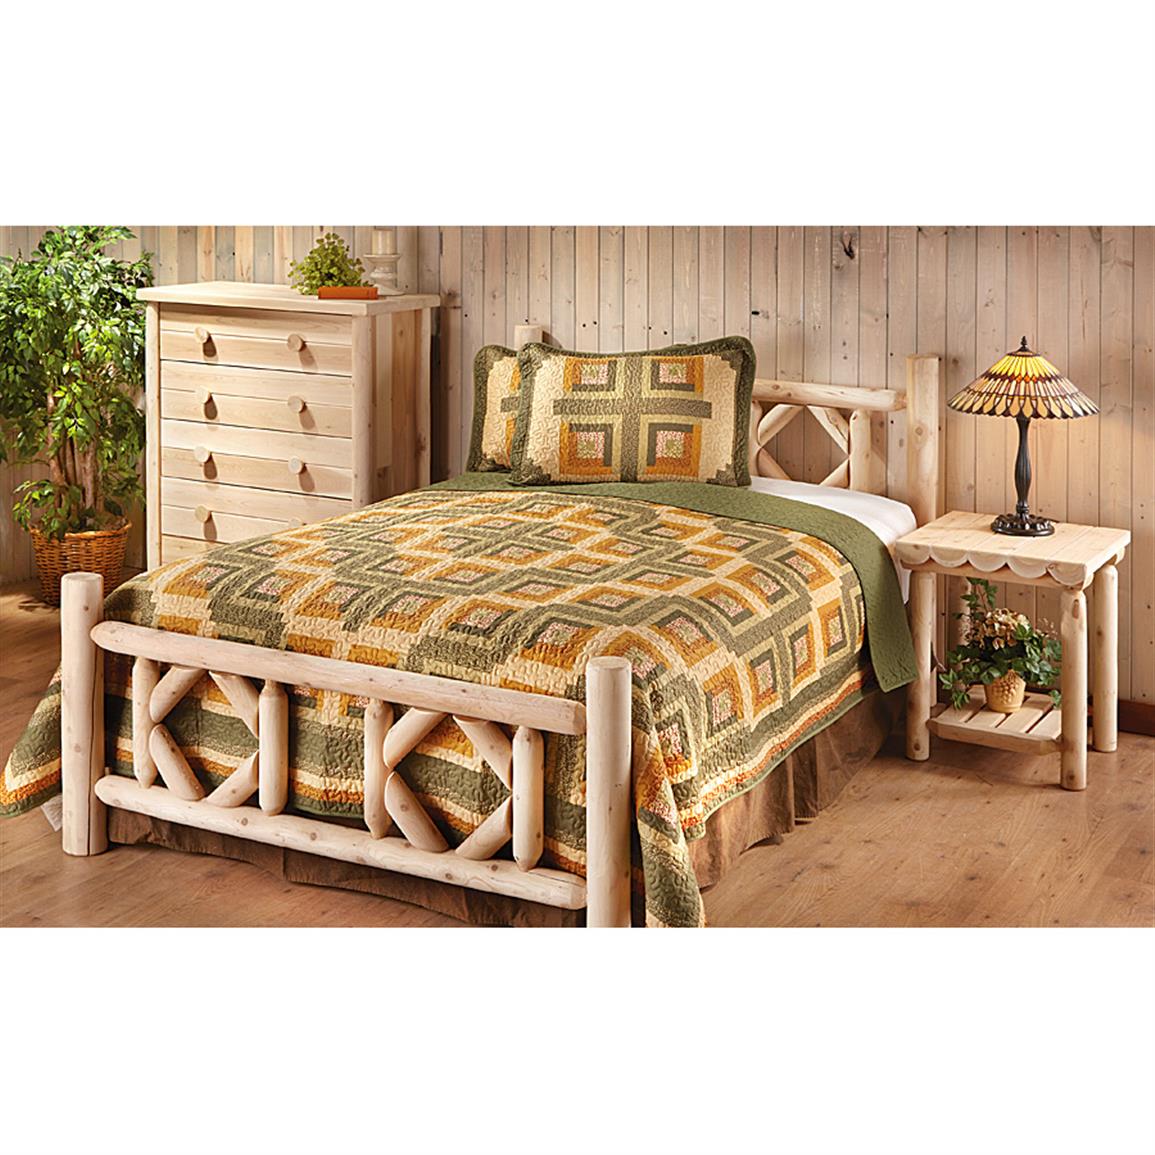 ... / Furniture / Bedroom Sets / King CASTLECREEK Diamond Cedar Log Bed